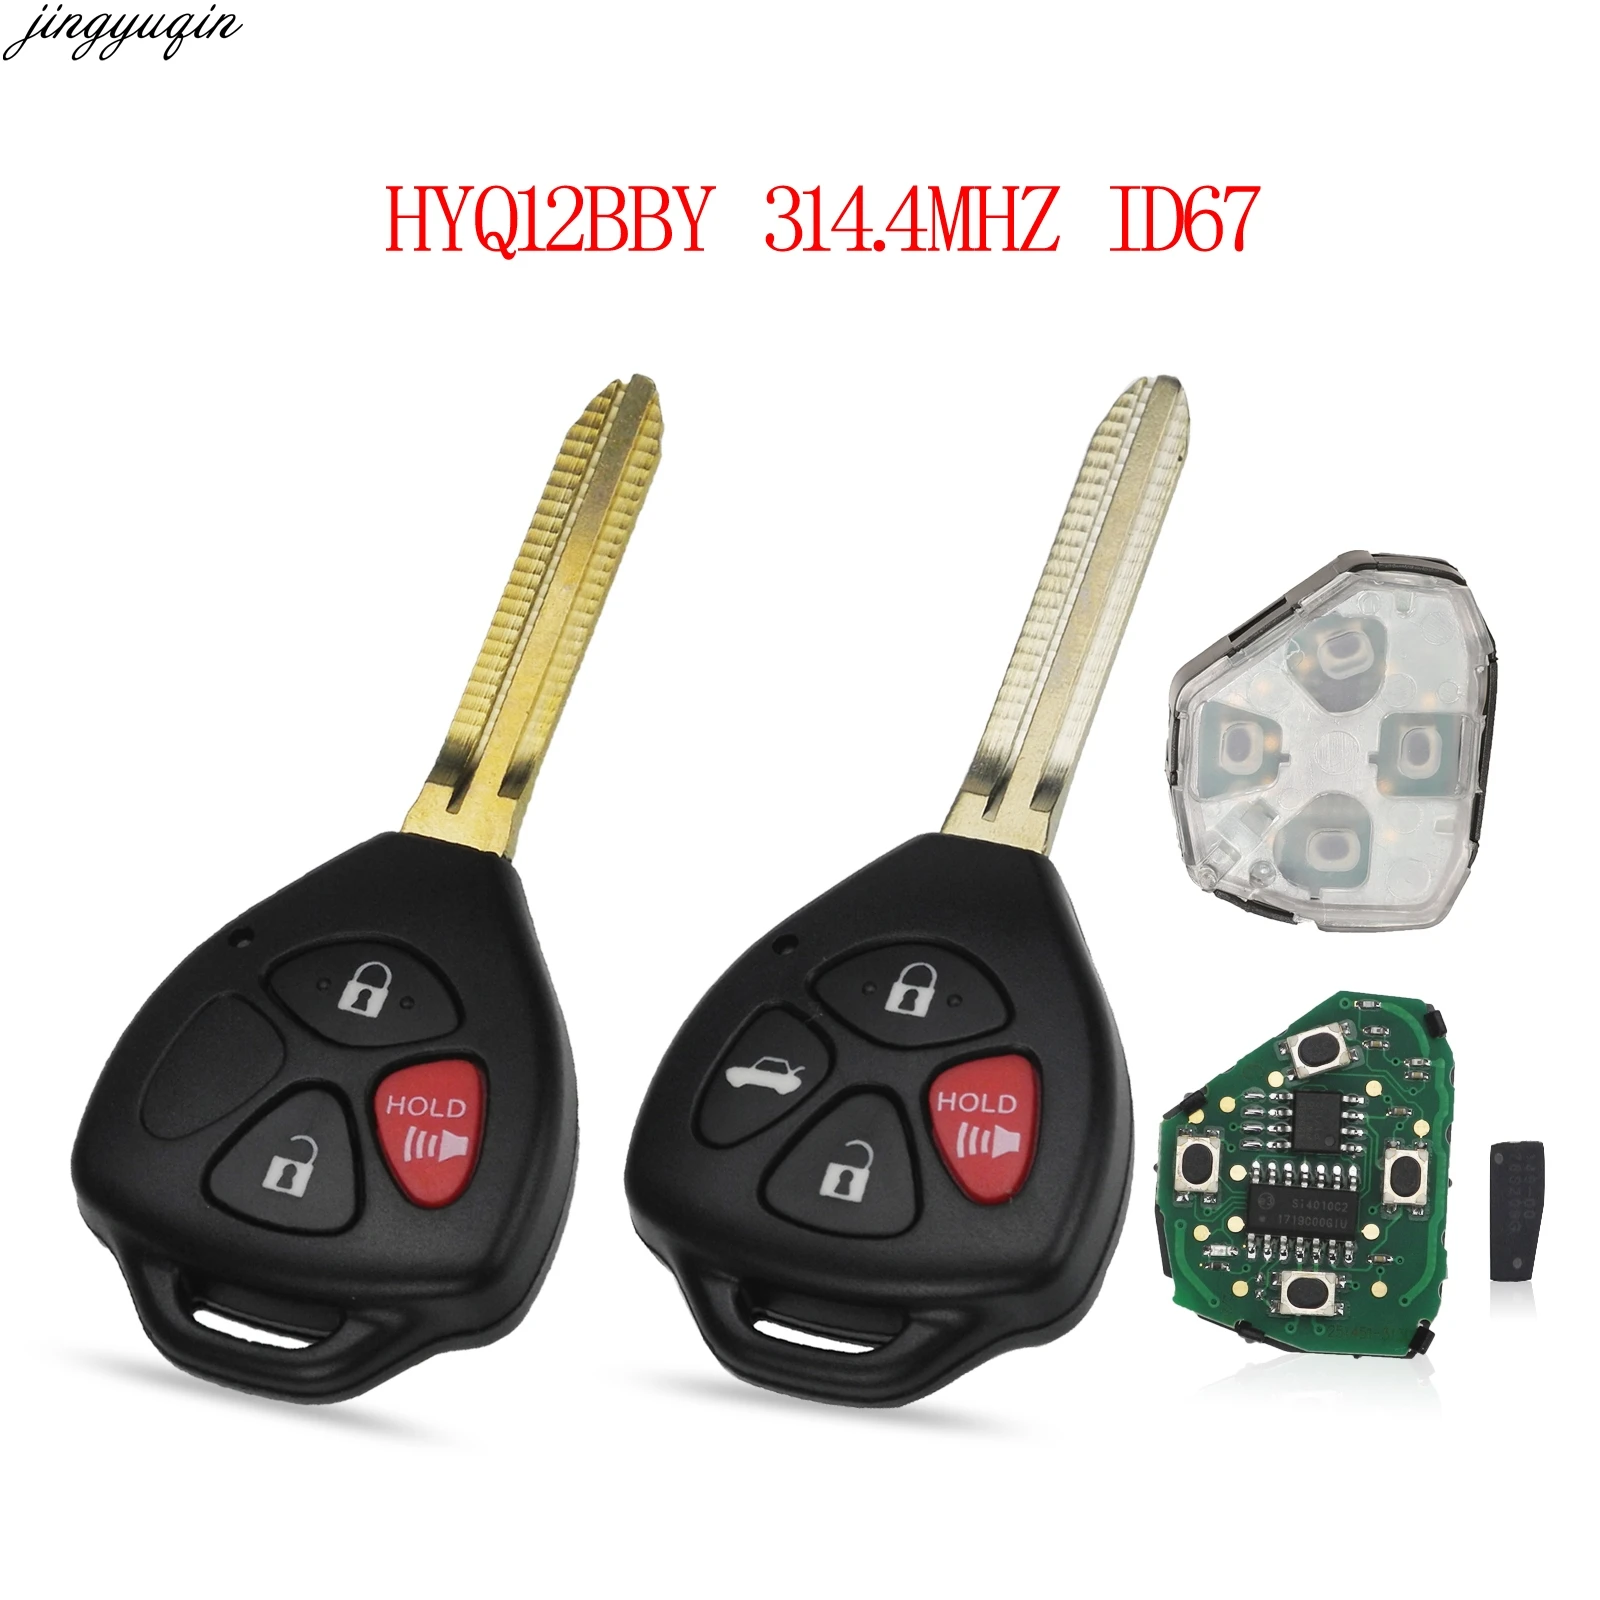 

Jingyuqin 3/4 Buttons Remote Car Key HYQ12BBY 314.4 MHZ ID67 For Toyota Camry Avalon Corolla Matrix RAV4 Yaris Venza tC xA xB xC